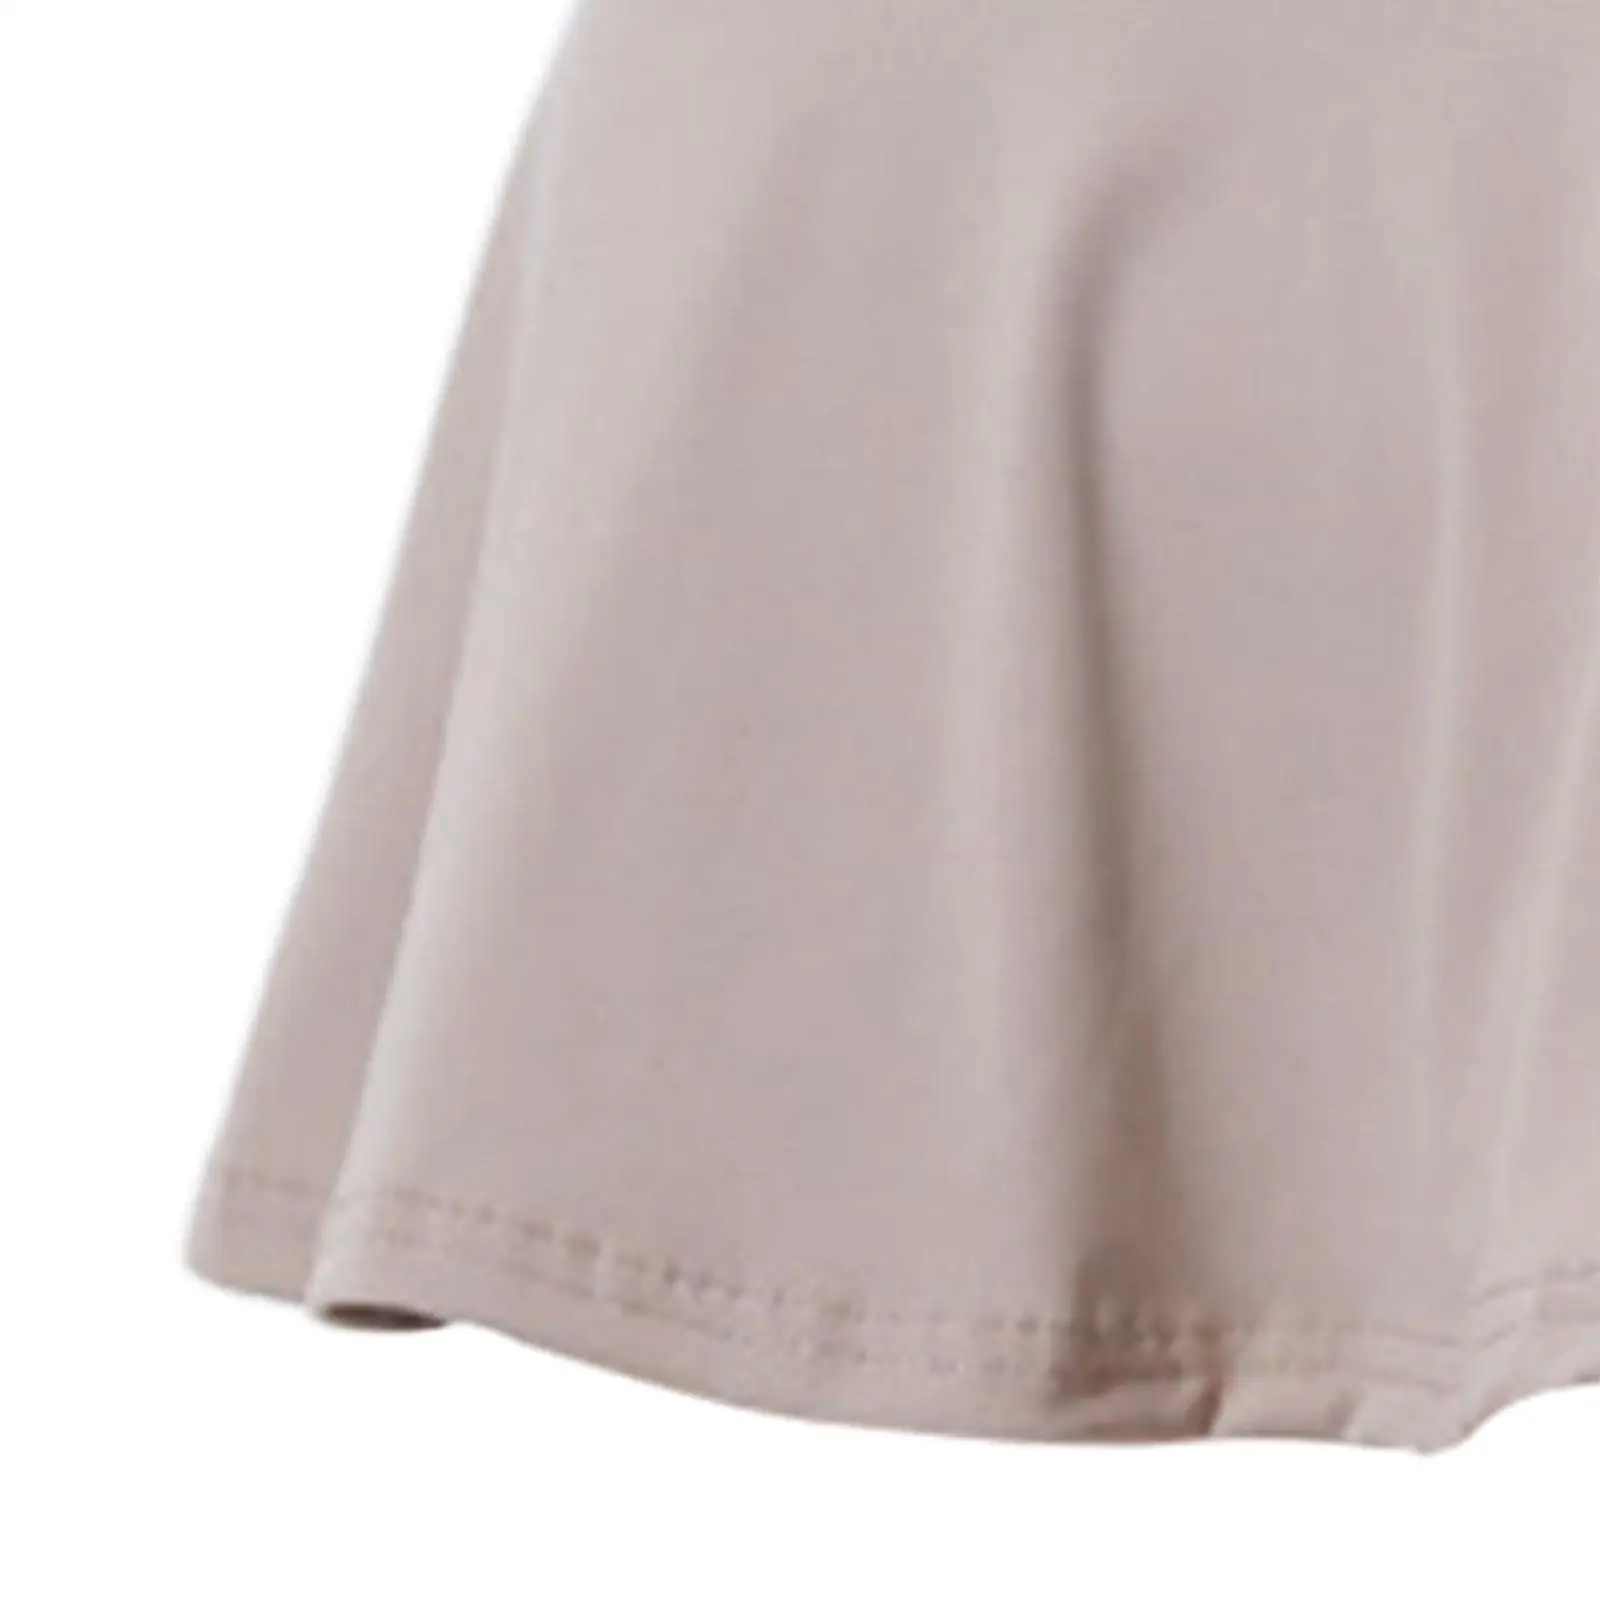 Tennis Skirt Short Skirts Quick Drying Clothing Soft Gymwear High Waist Golf Skorts for Workout Tennis Jogging Exercise Fitness